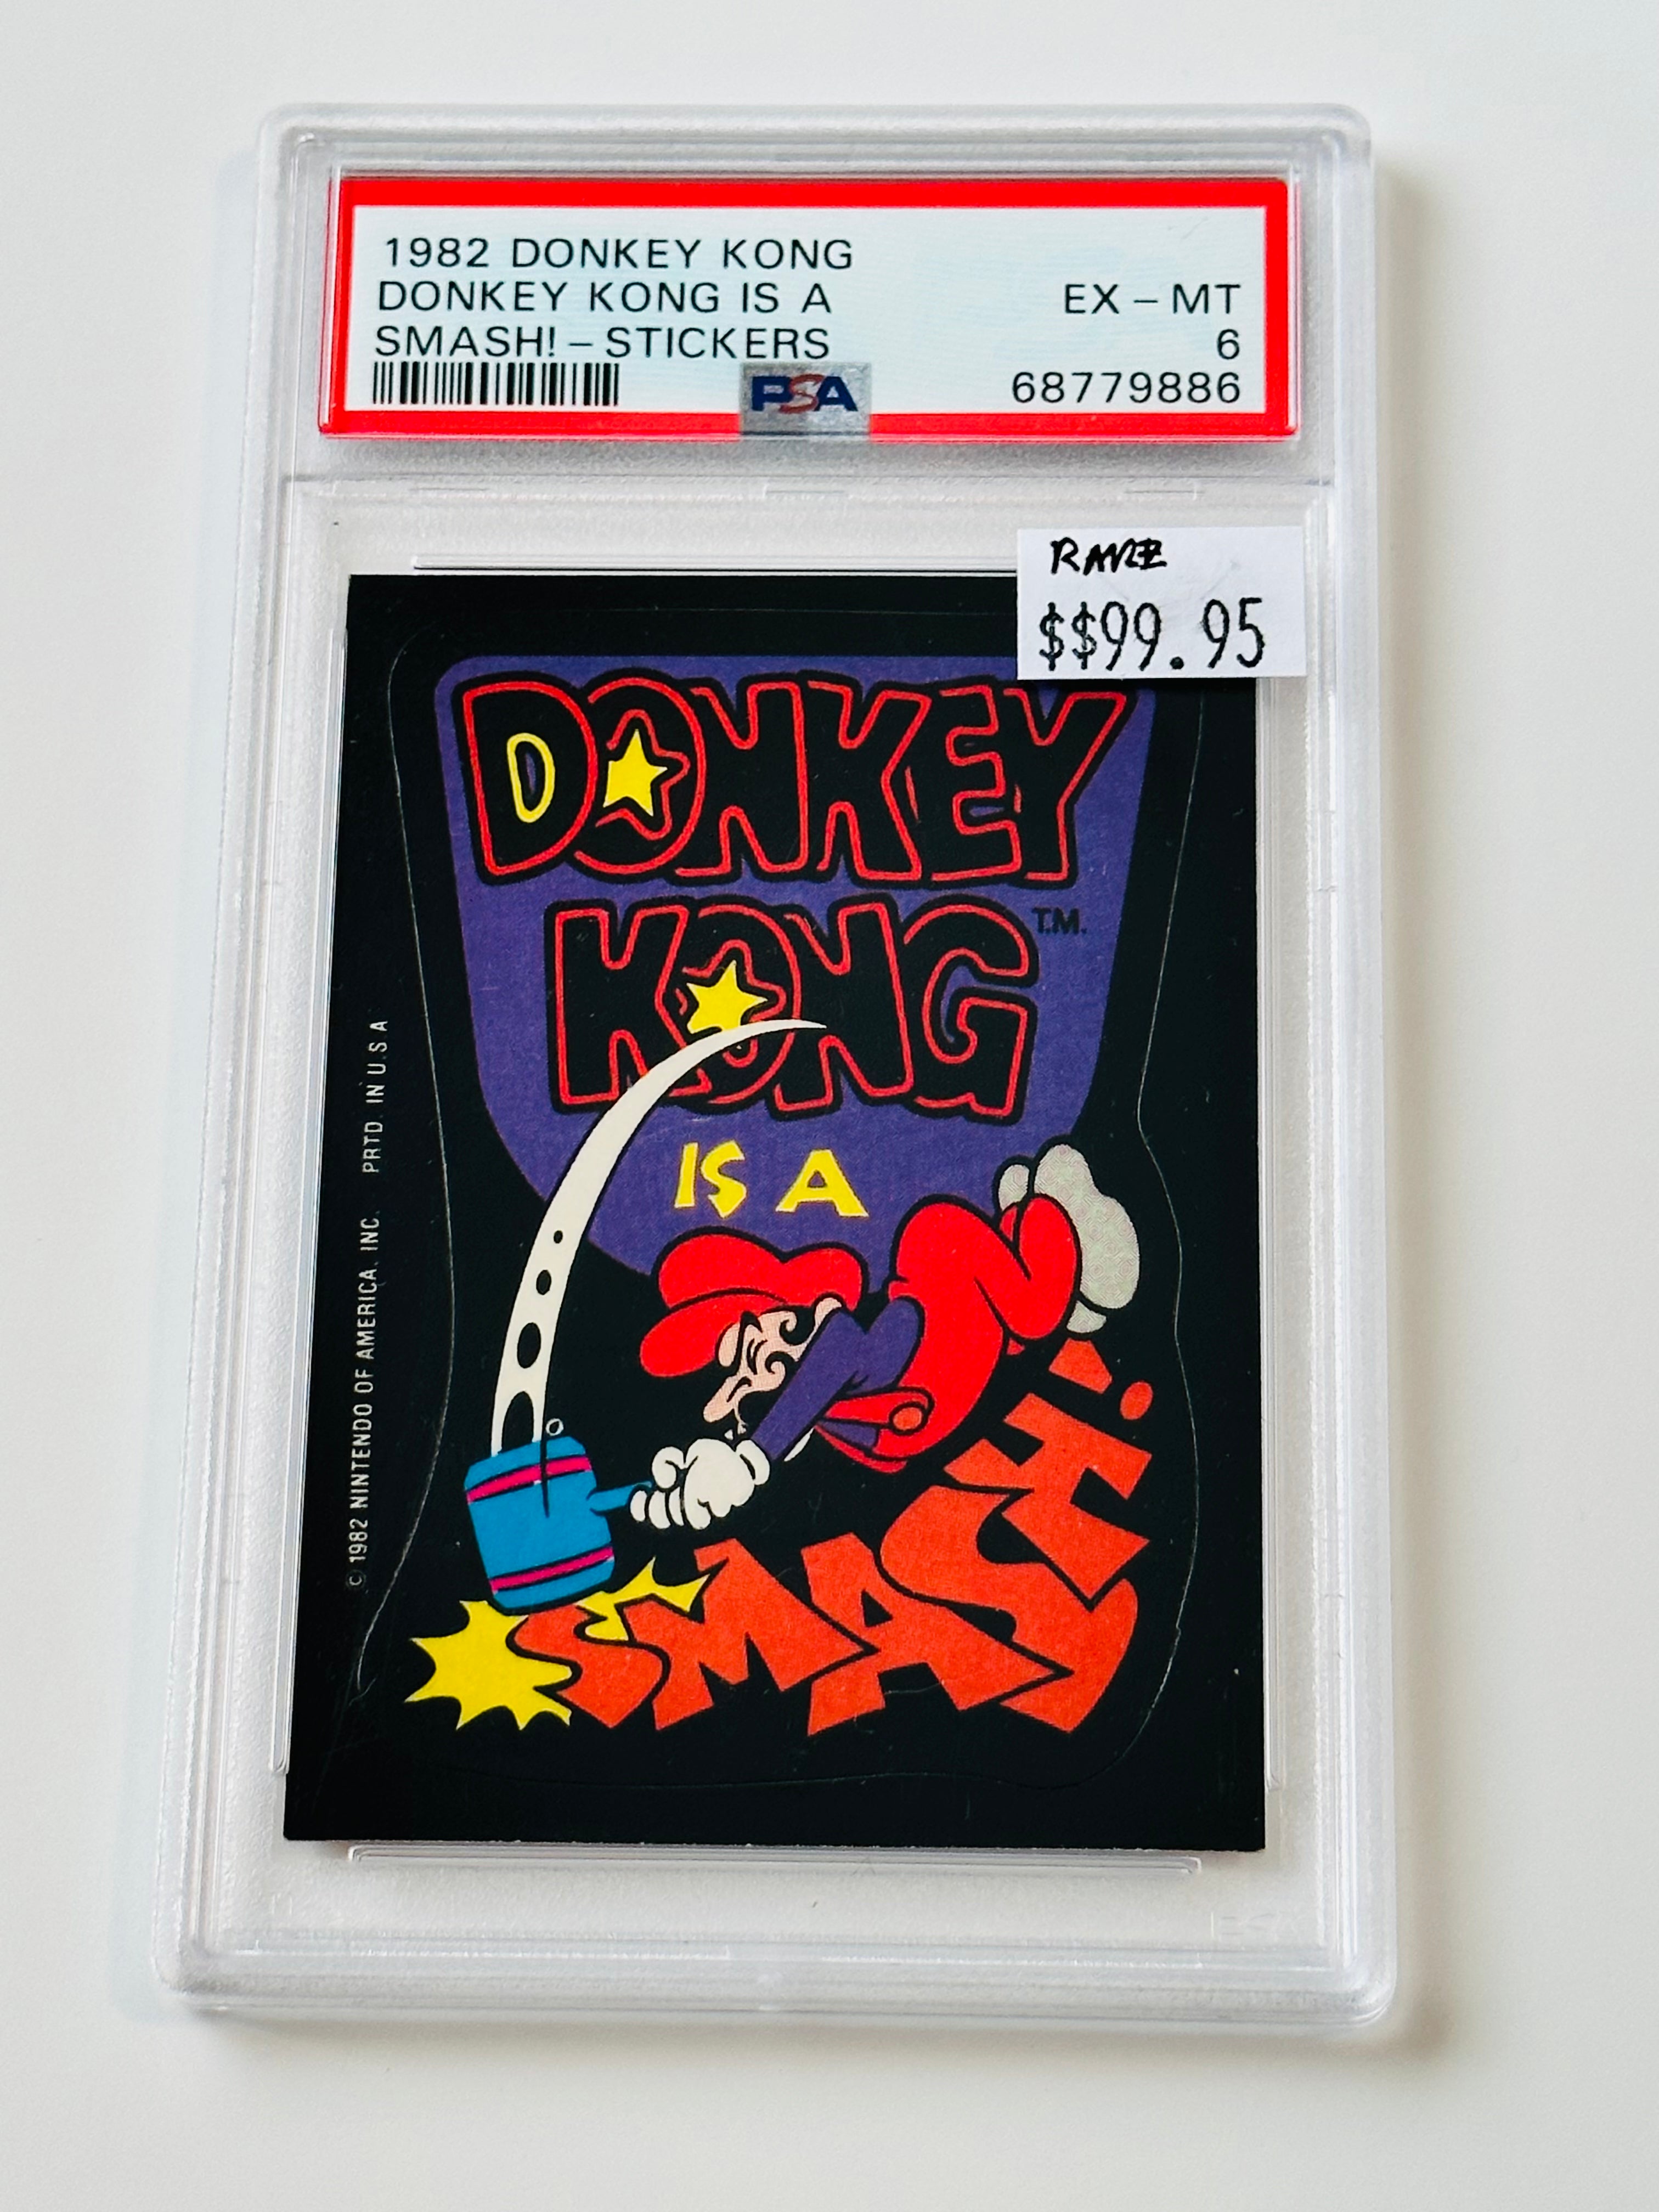 Donkey Kong PSA high grade sticker 1982.